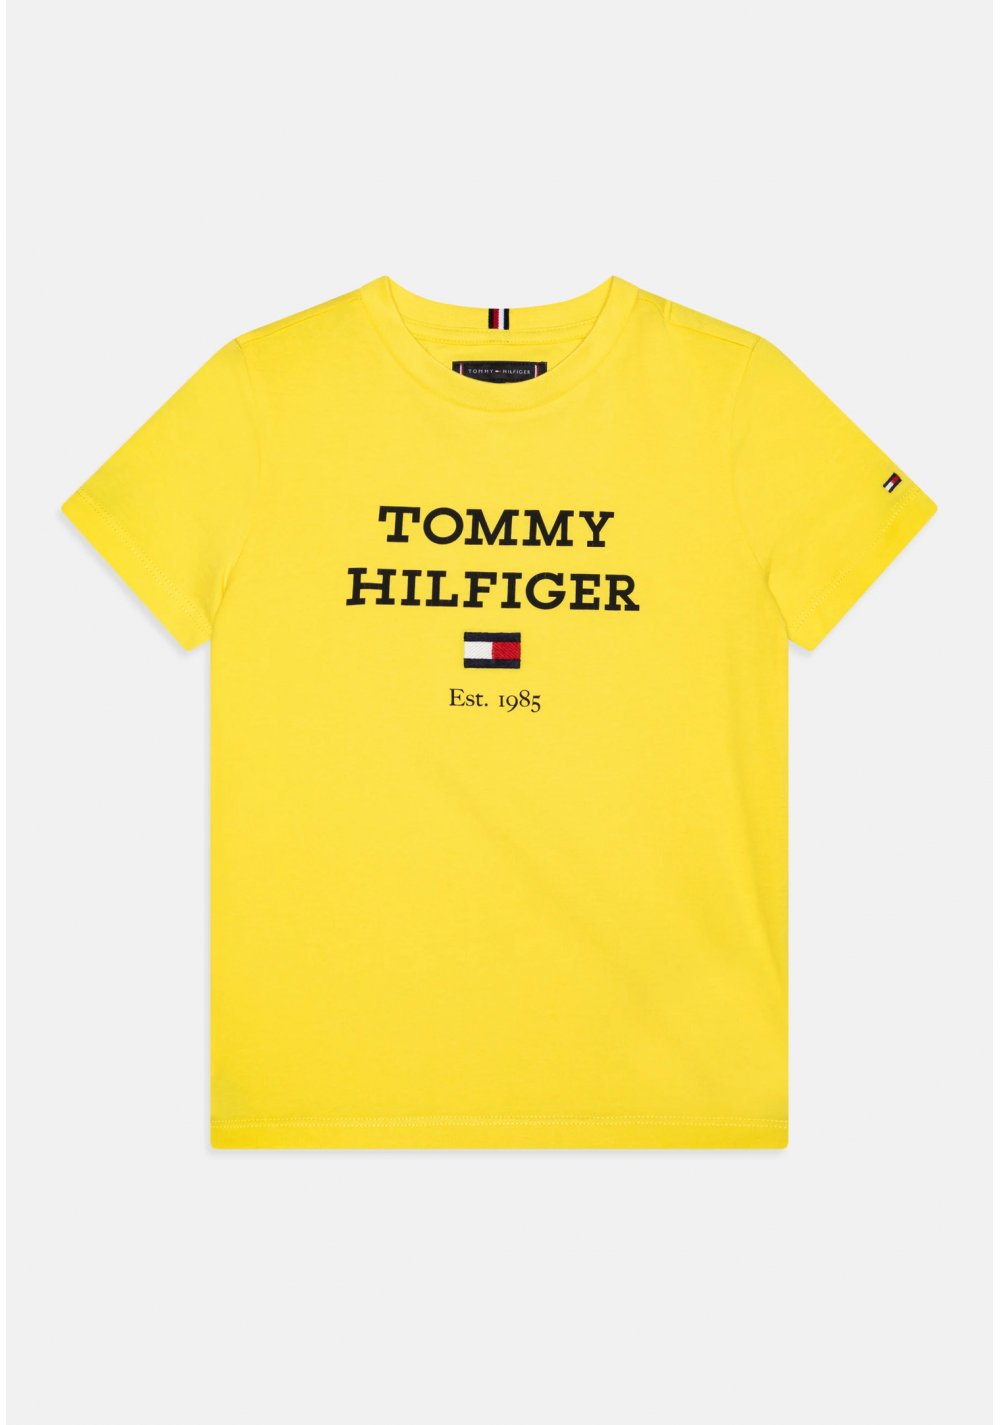 Tommy Hilfiger bambino LOGO TEE - T-shirt giallo in cotone con stampa logo